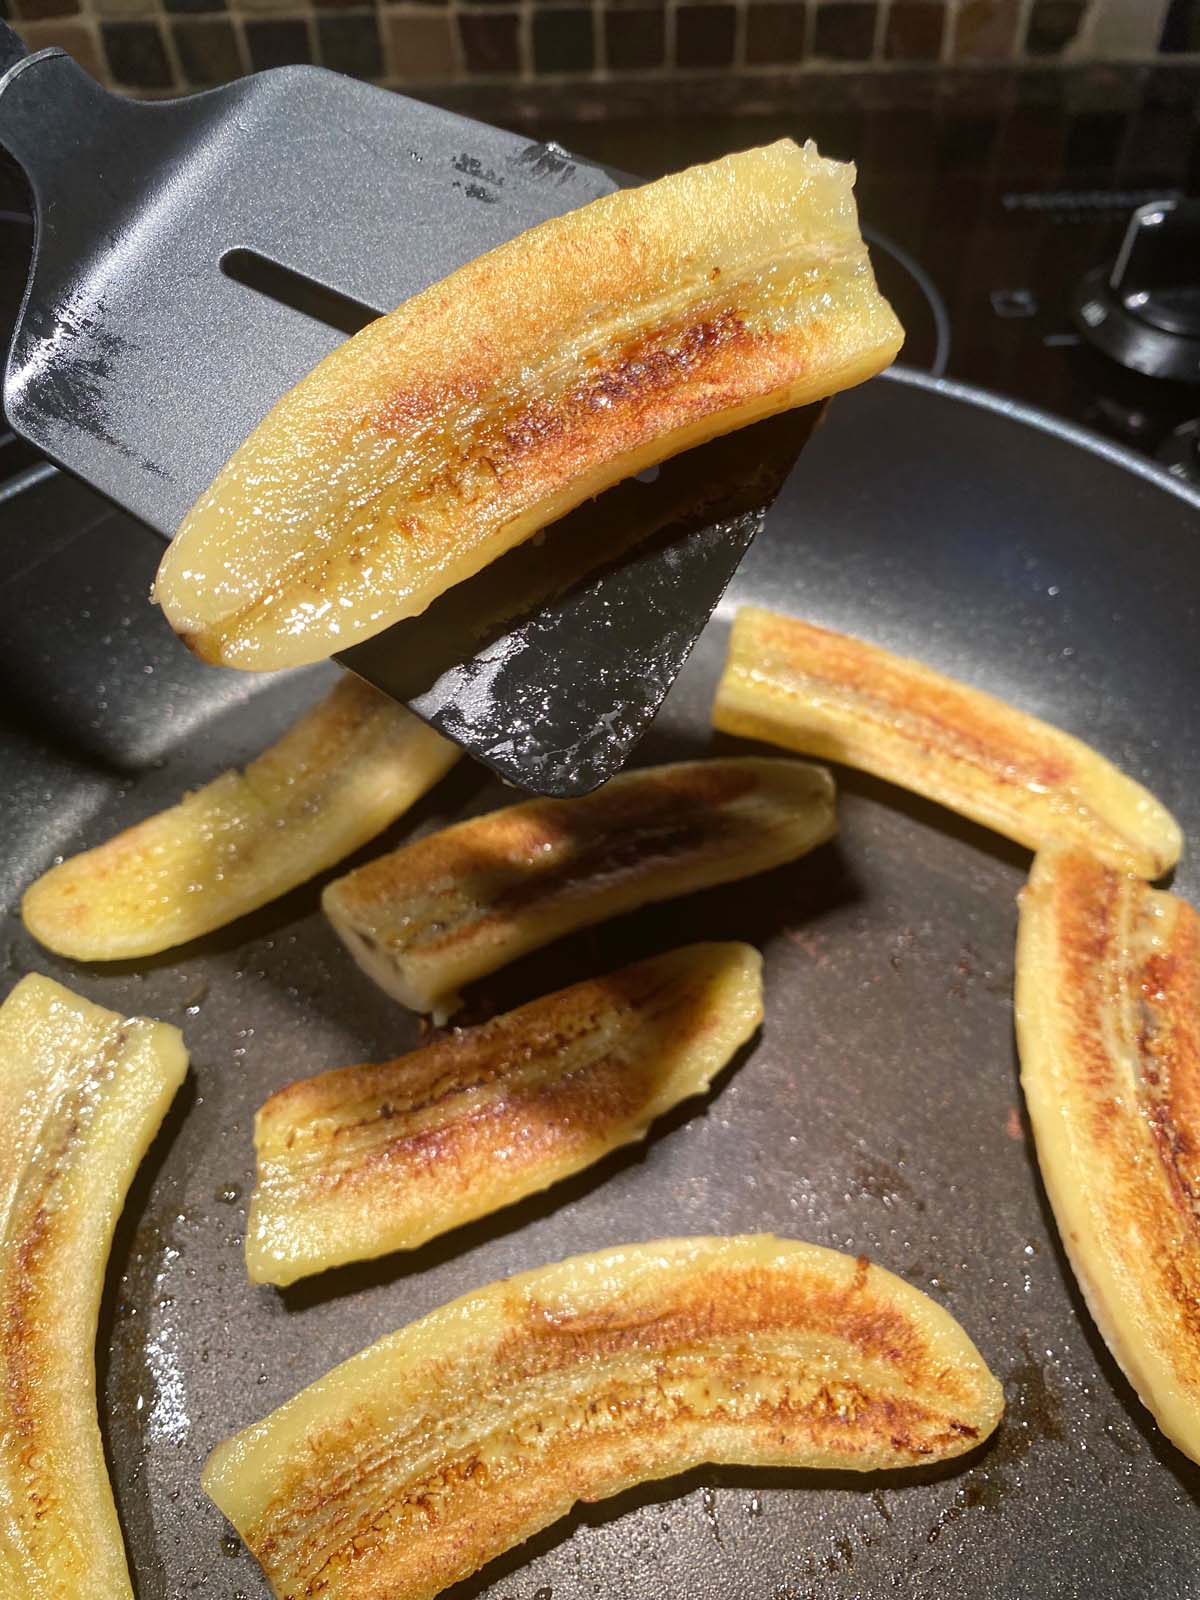 Fried bananas in a frying pan.